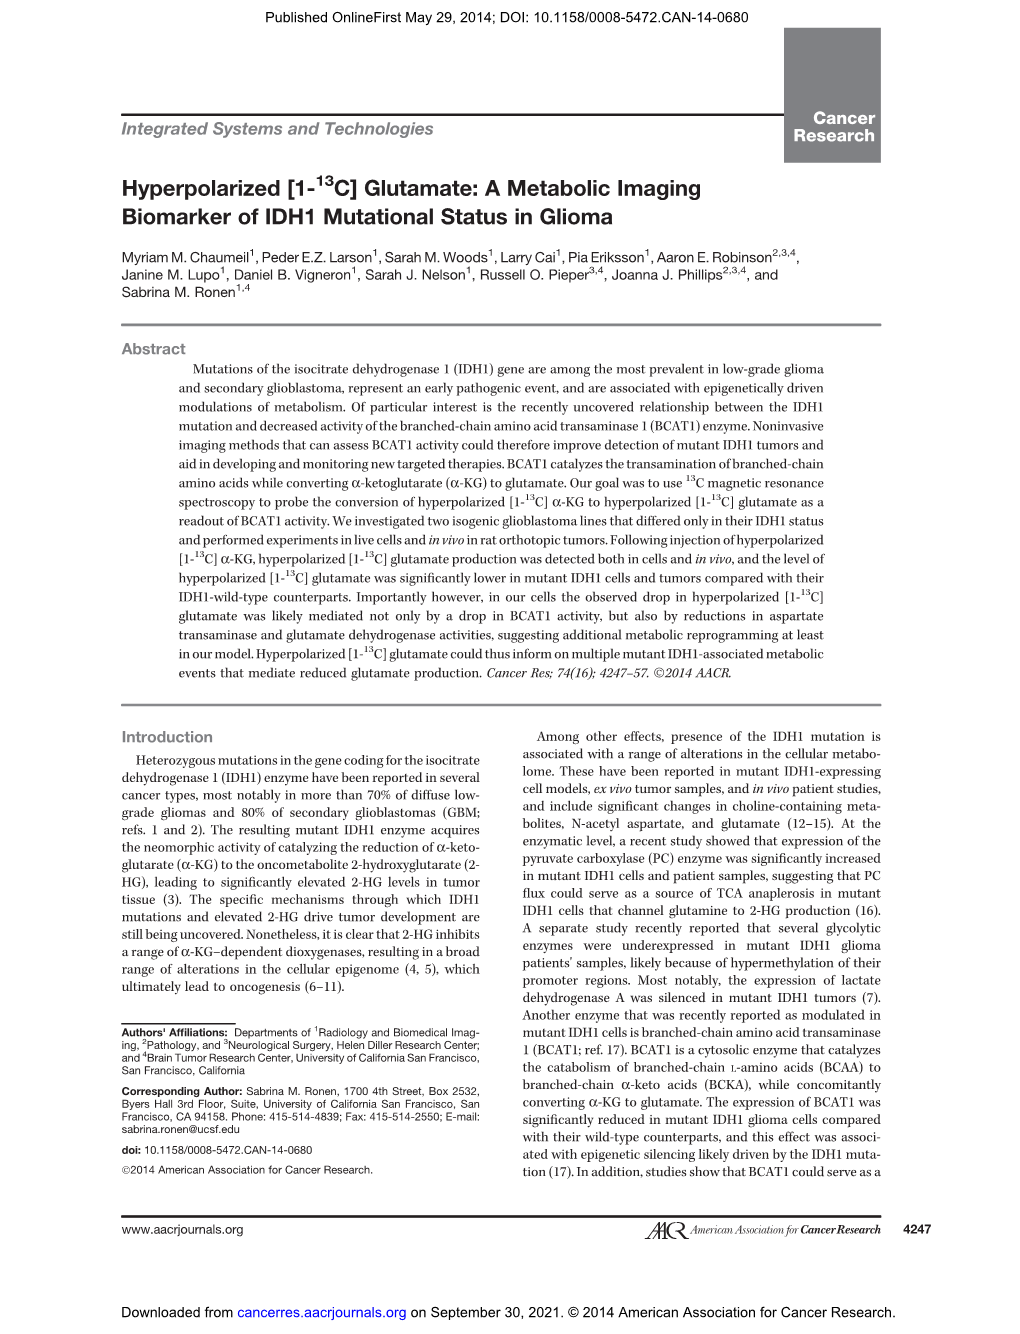 A Metabolic Imaging Biomarker of IDH1 Mutational Status in Glioma